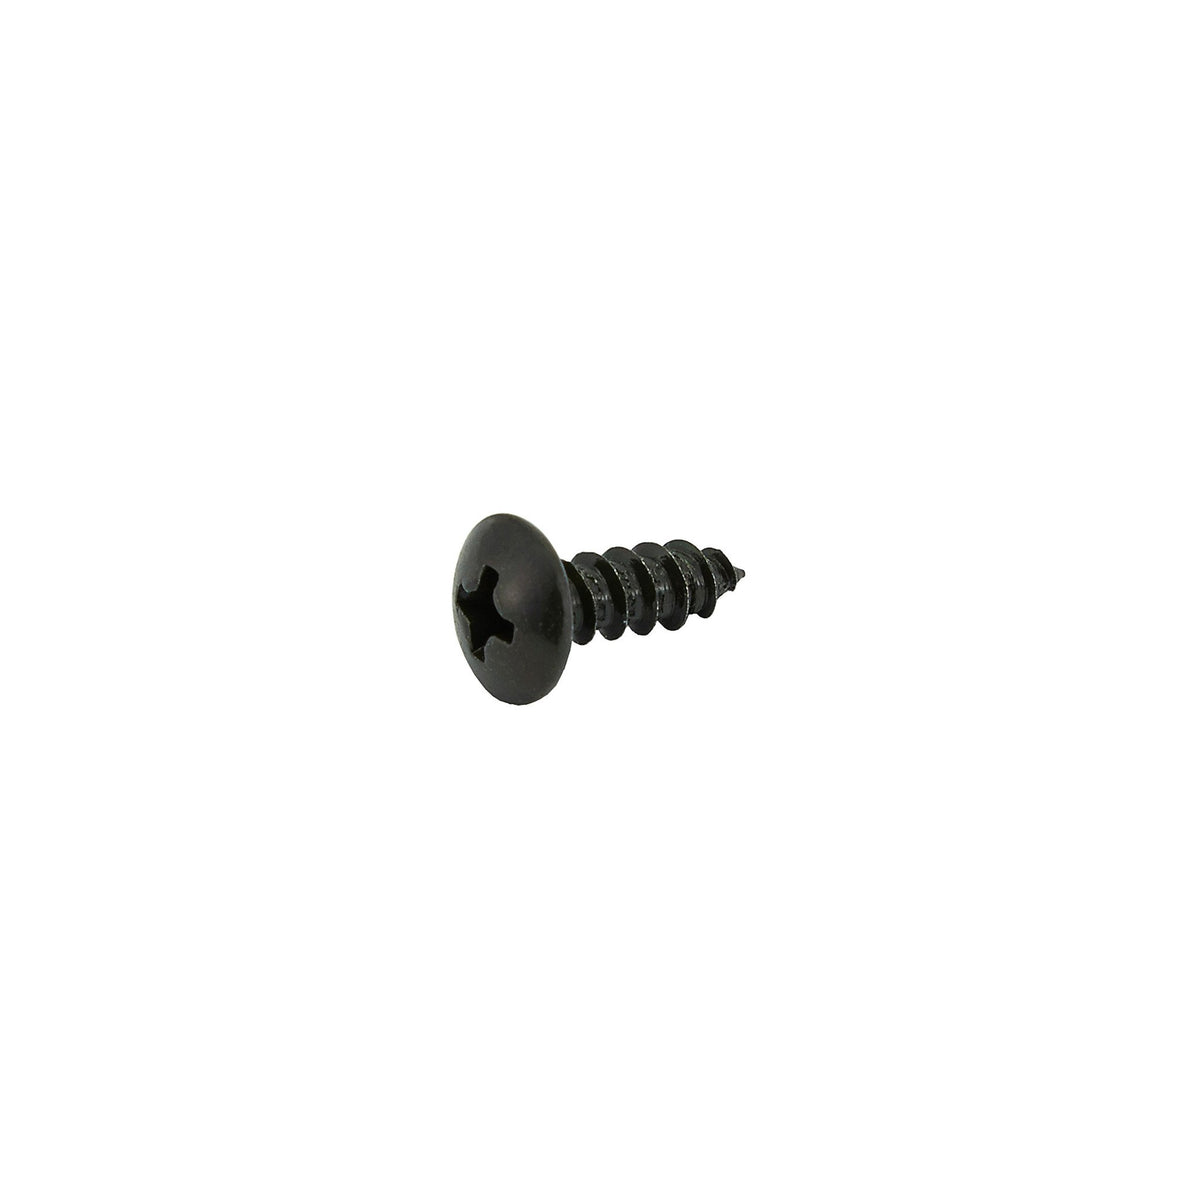 Speaker fixing screws 3.5 x12mm pan head PH2. Pack of 8. Top quality. - Willys-Hifi Ltd